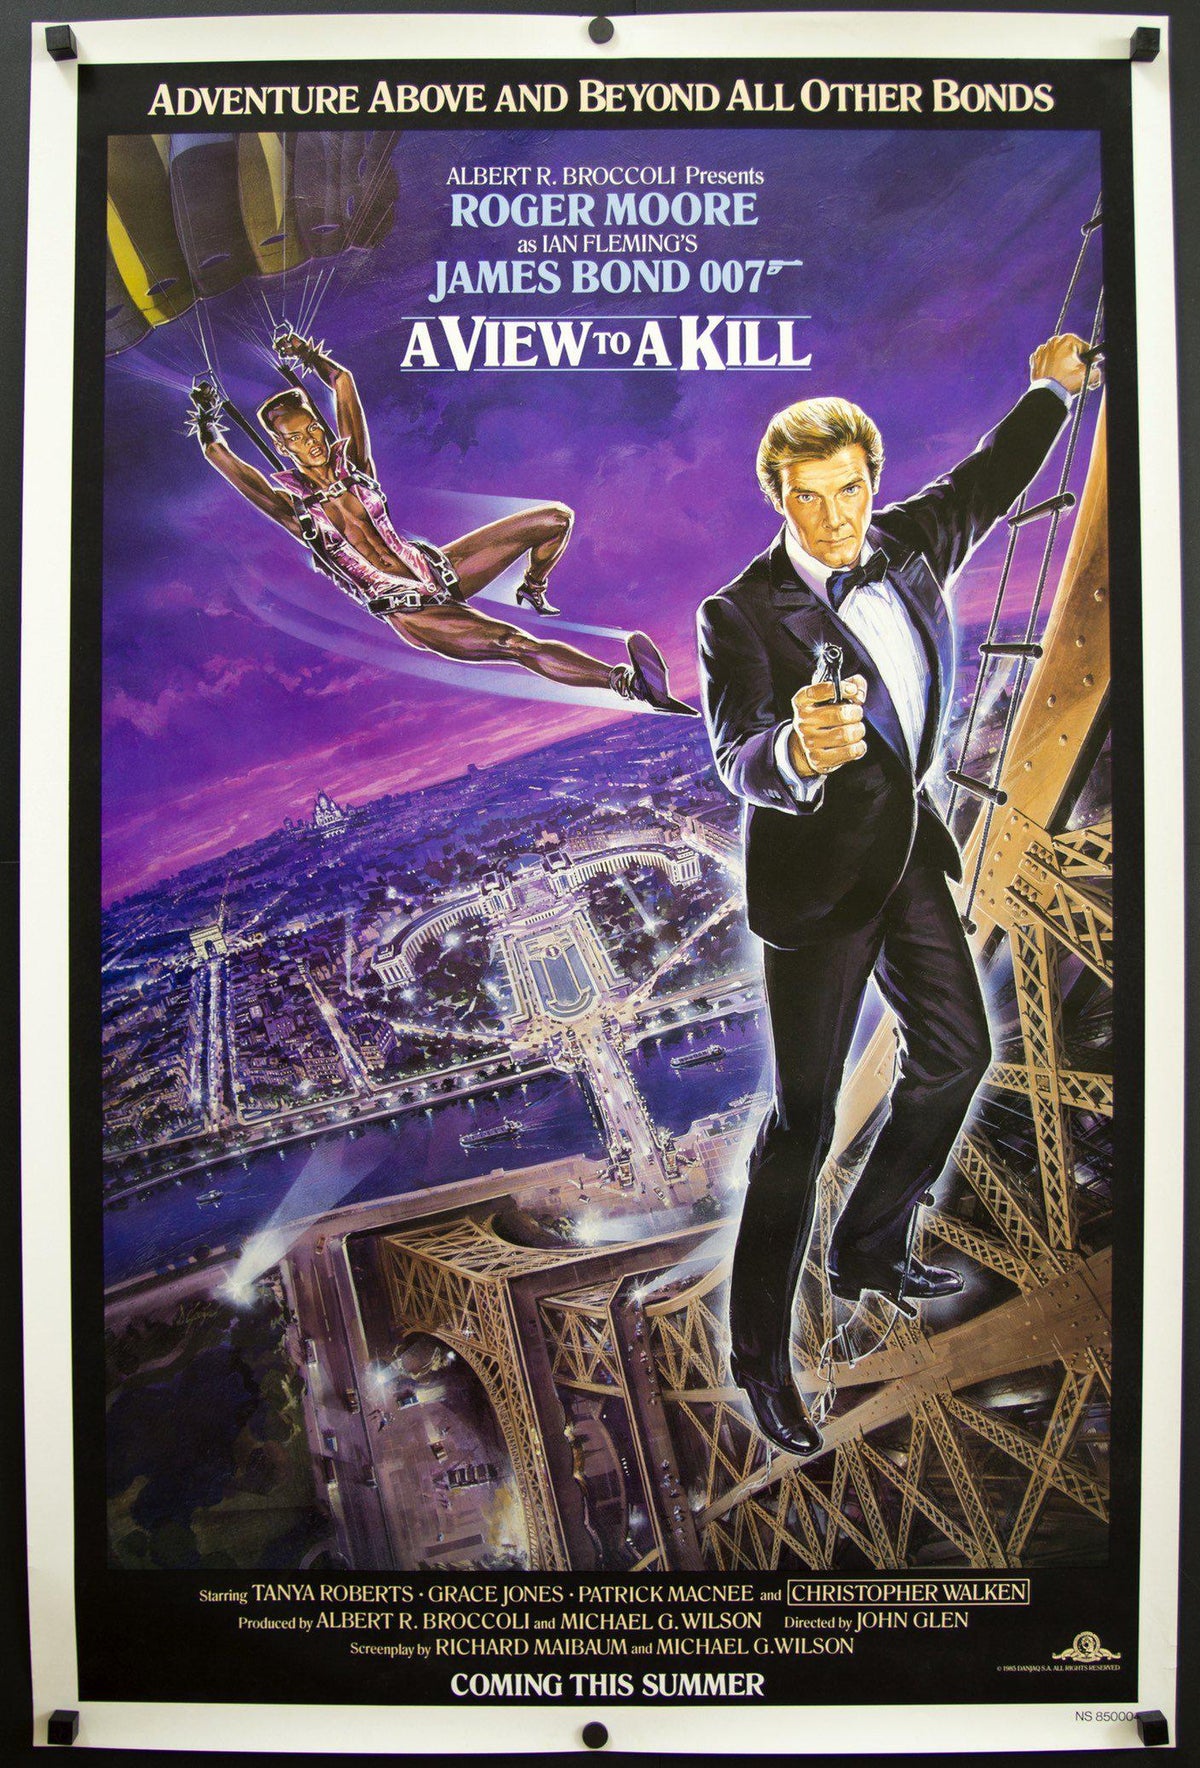 View to a Kill (1985) original movie poster for sale at Original Film Art